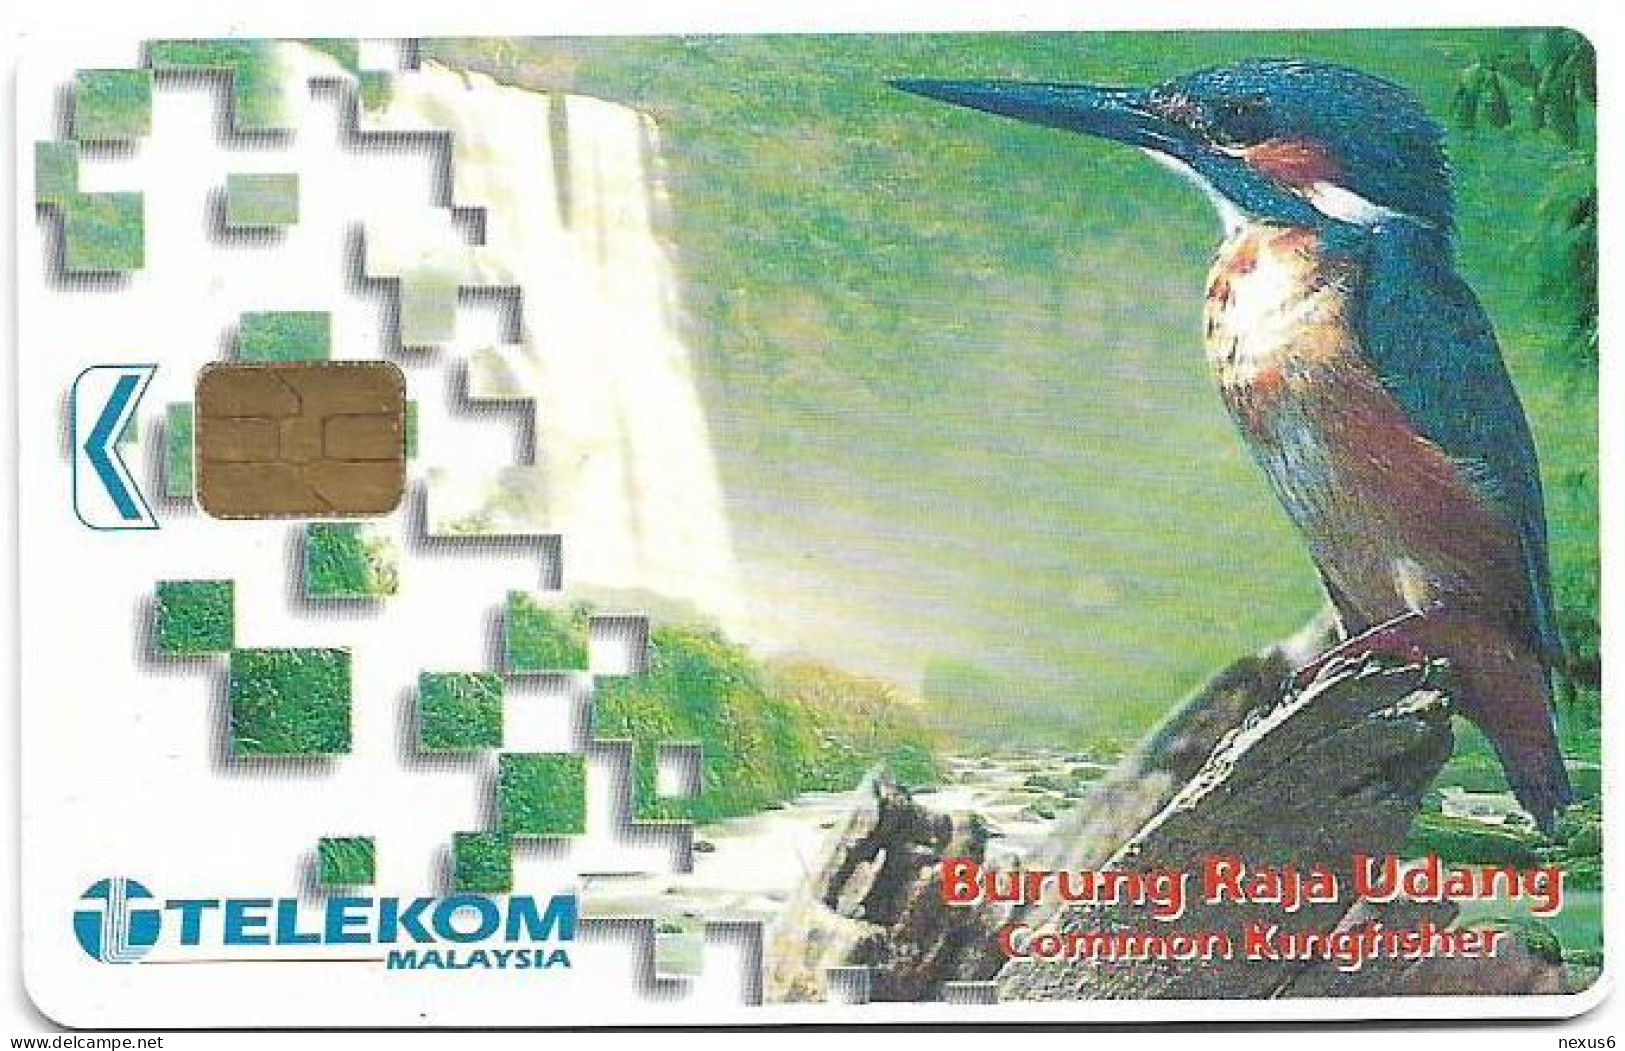 Malaysia - Telekom Malaysia (chip) - Birds - Burung Raja Udang, Chip Siemens S5, 10RM, Used - Malasia